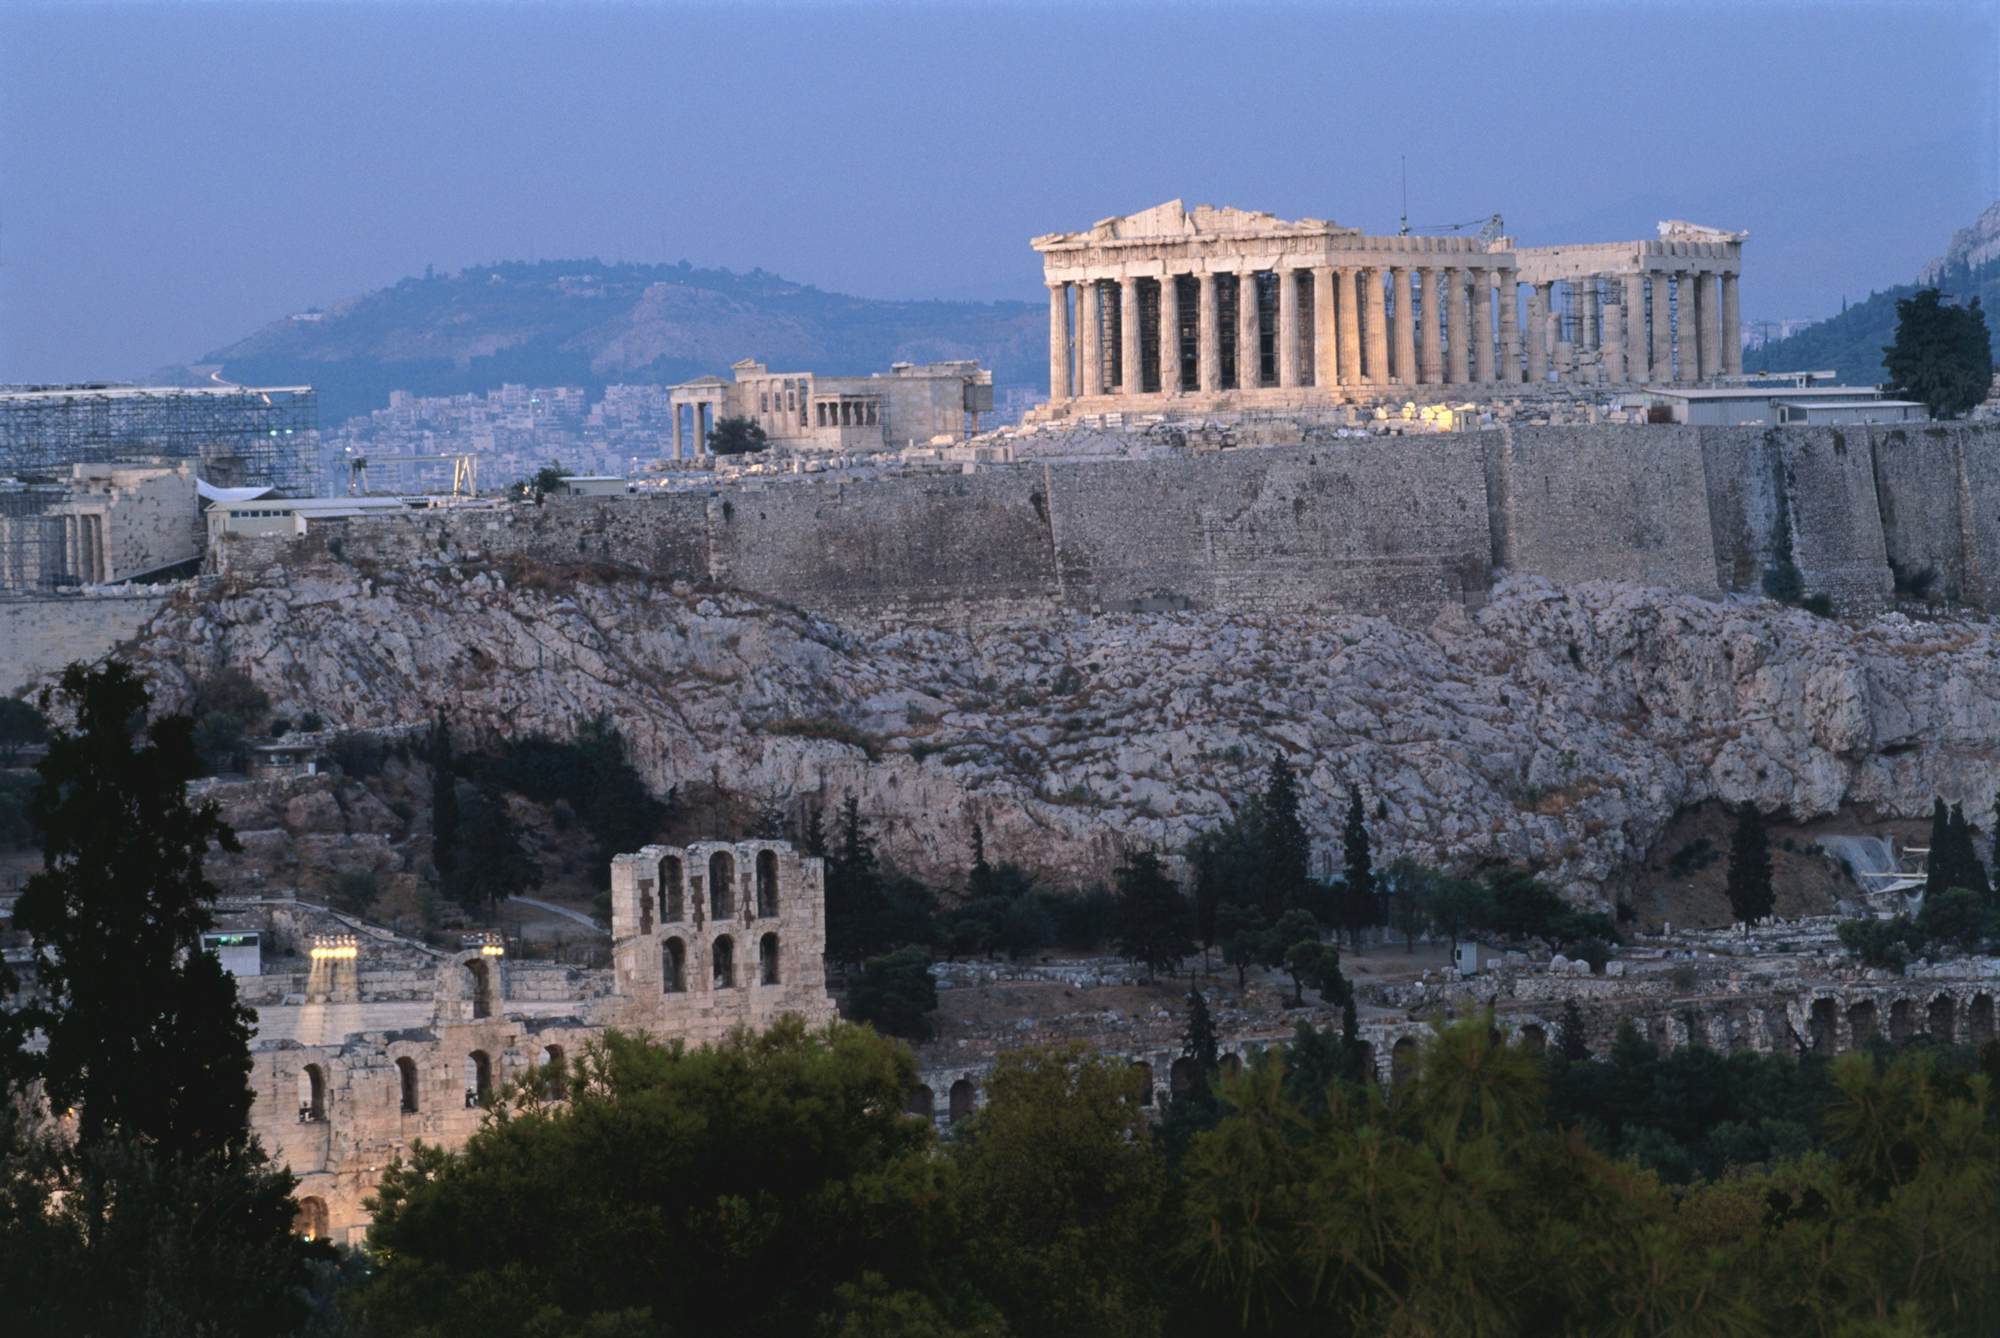 acropolis tourist rules